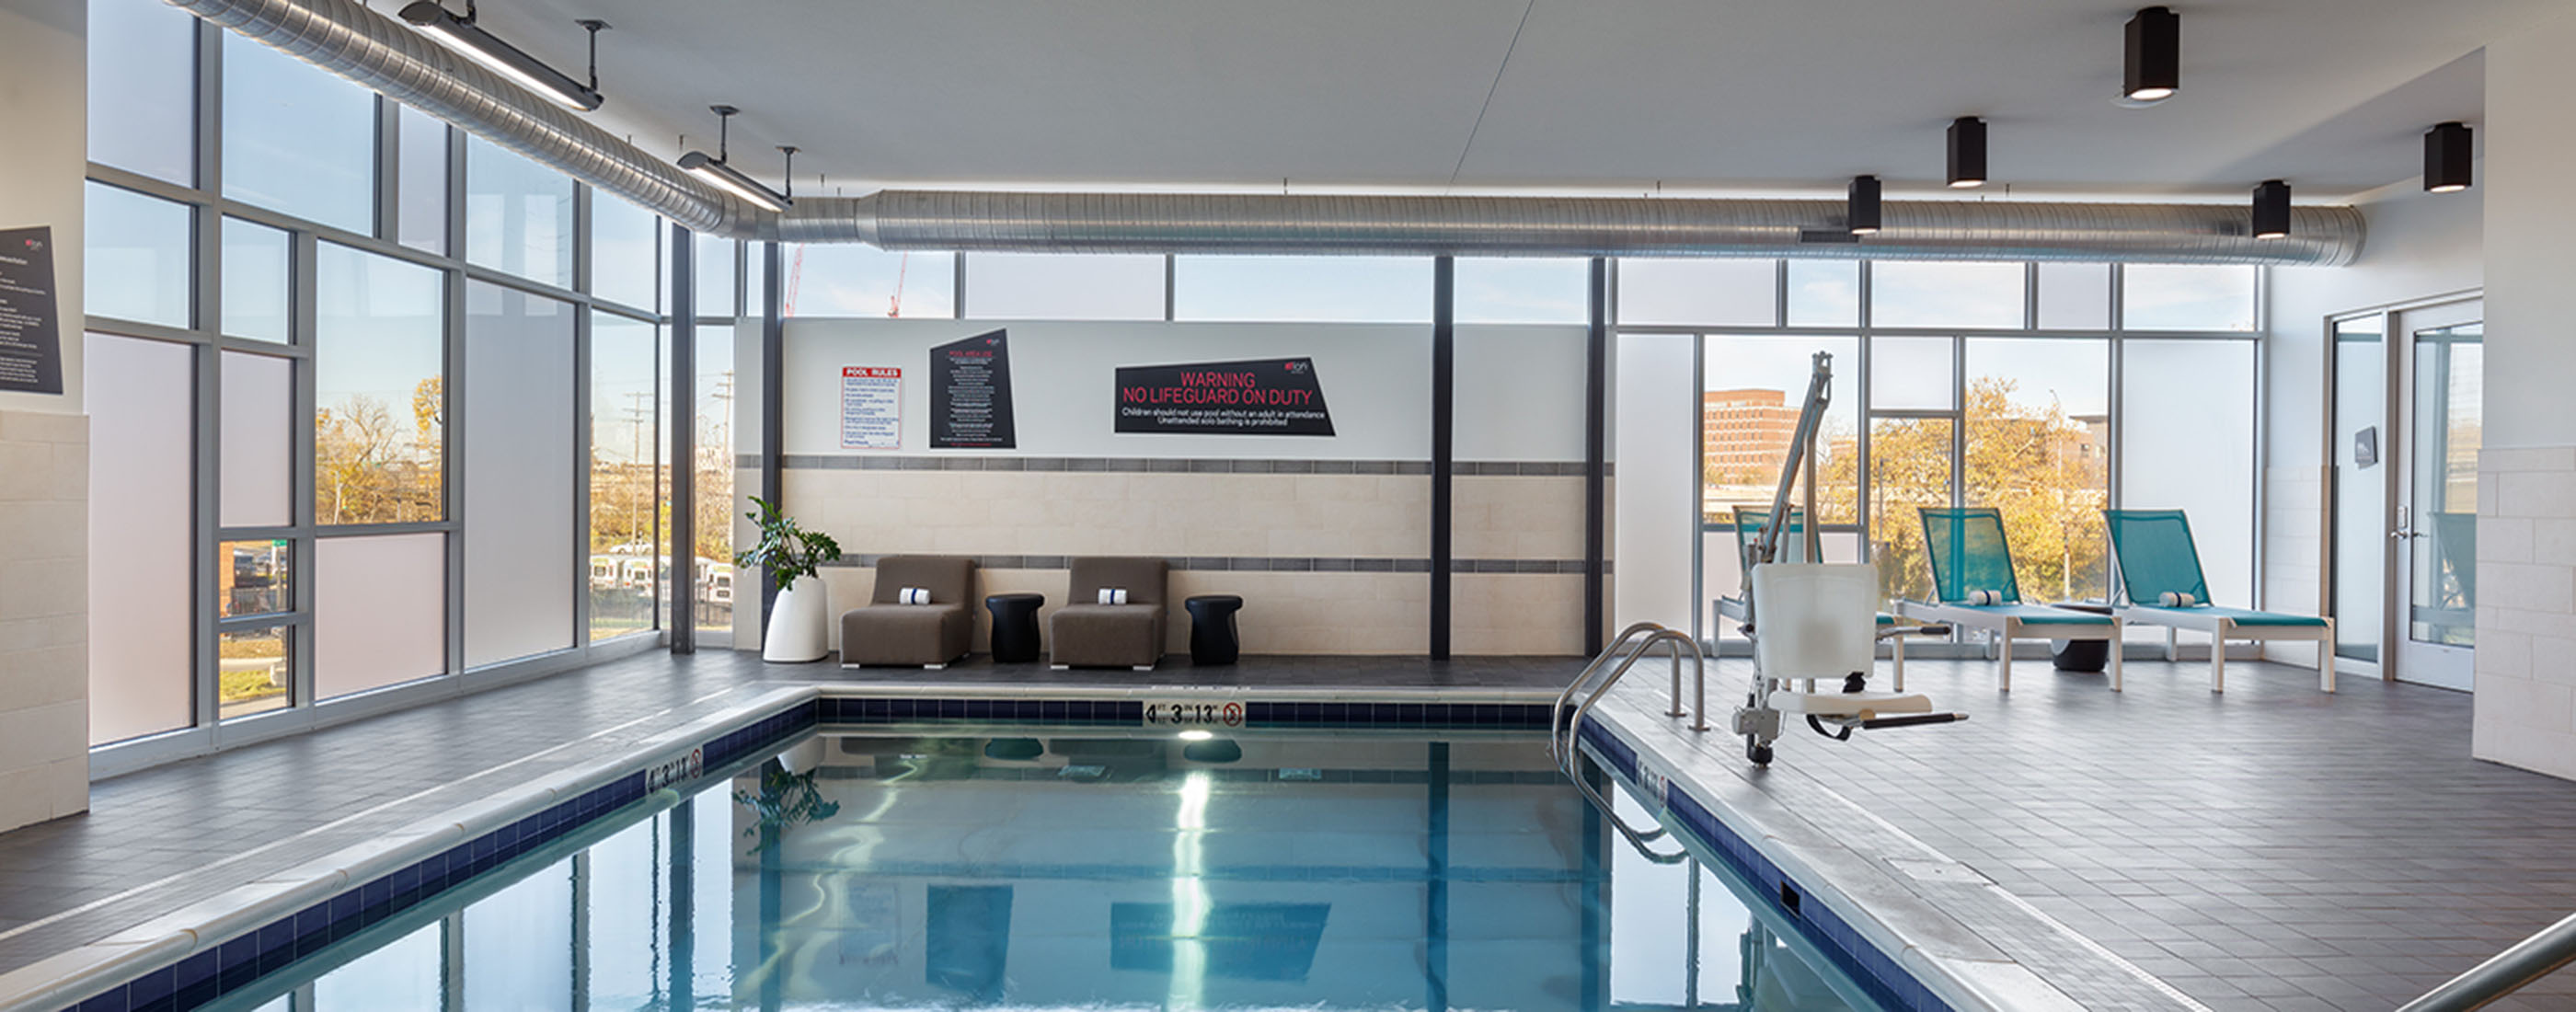 Aloft Hotel indoor pool